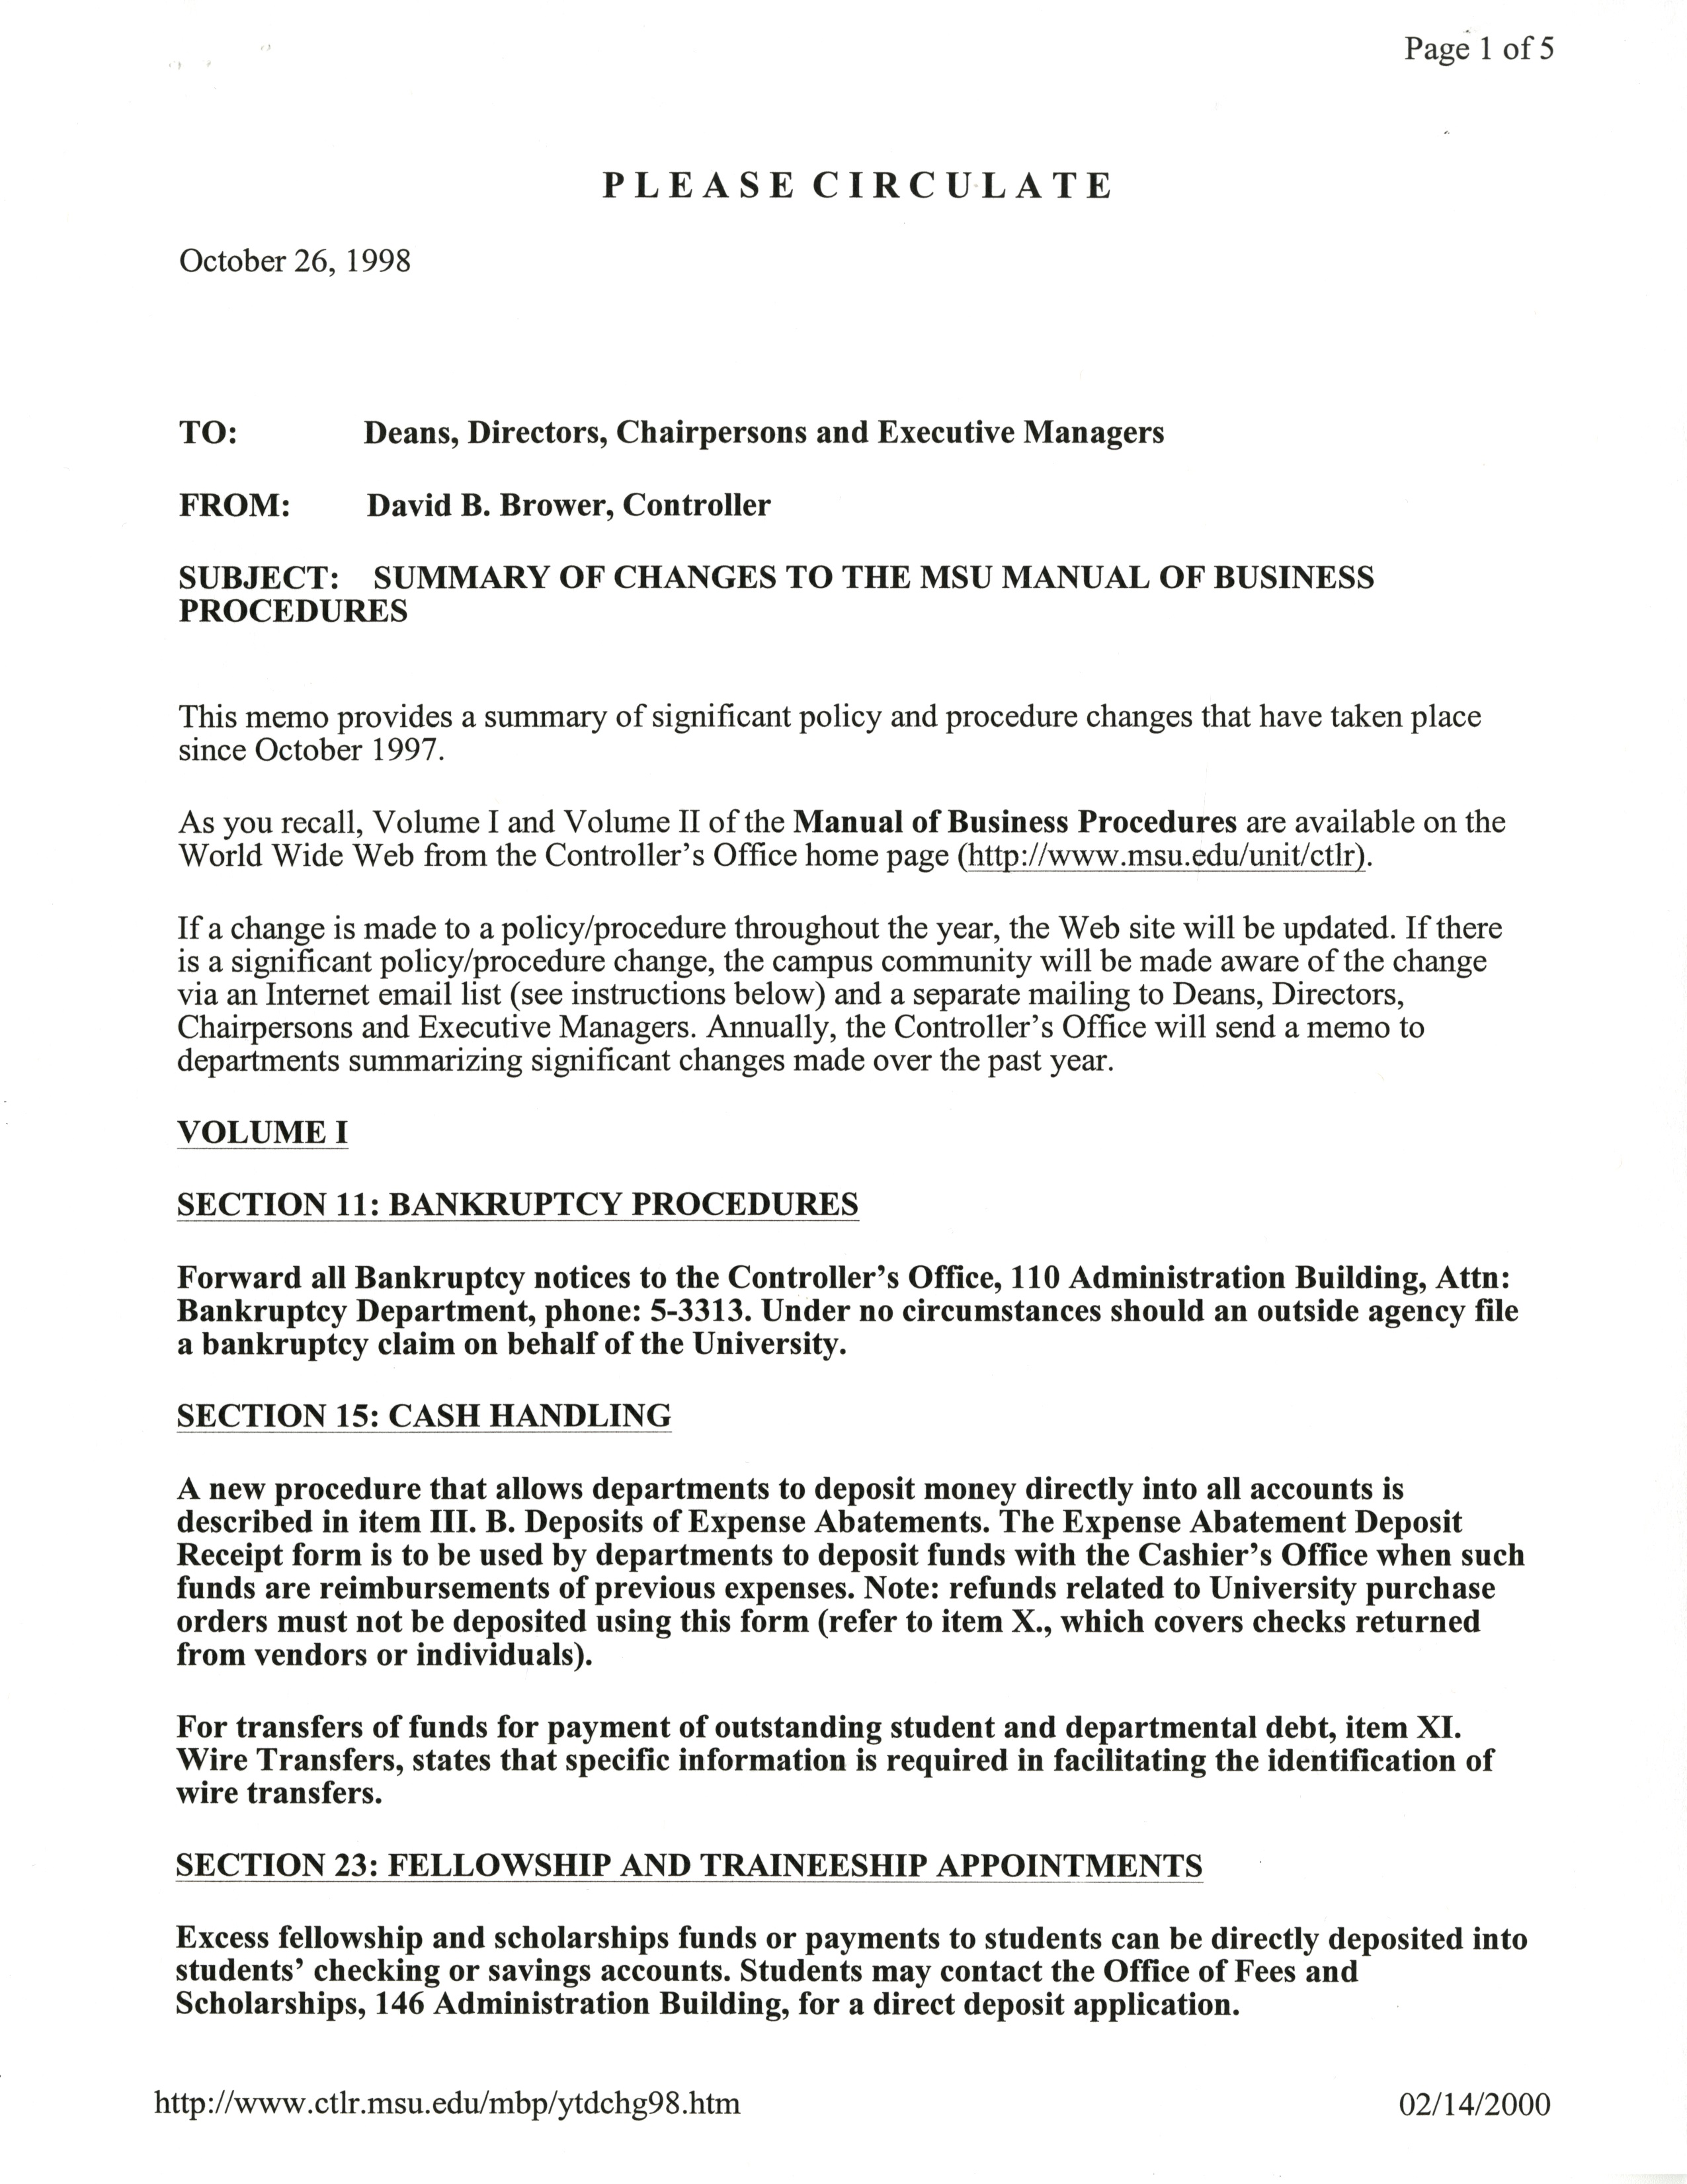 MSU Manual of Business Procedures, 1998-1999